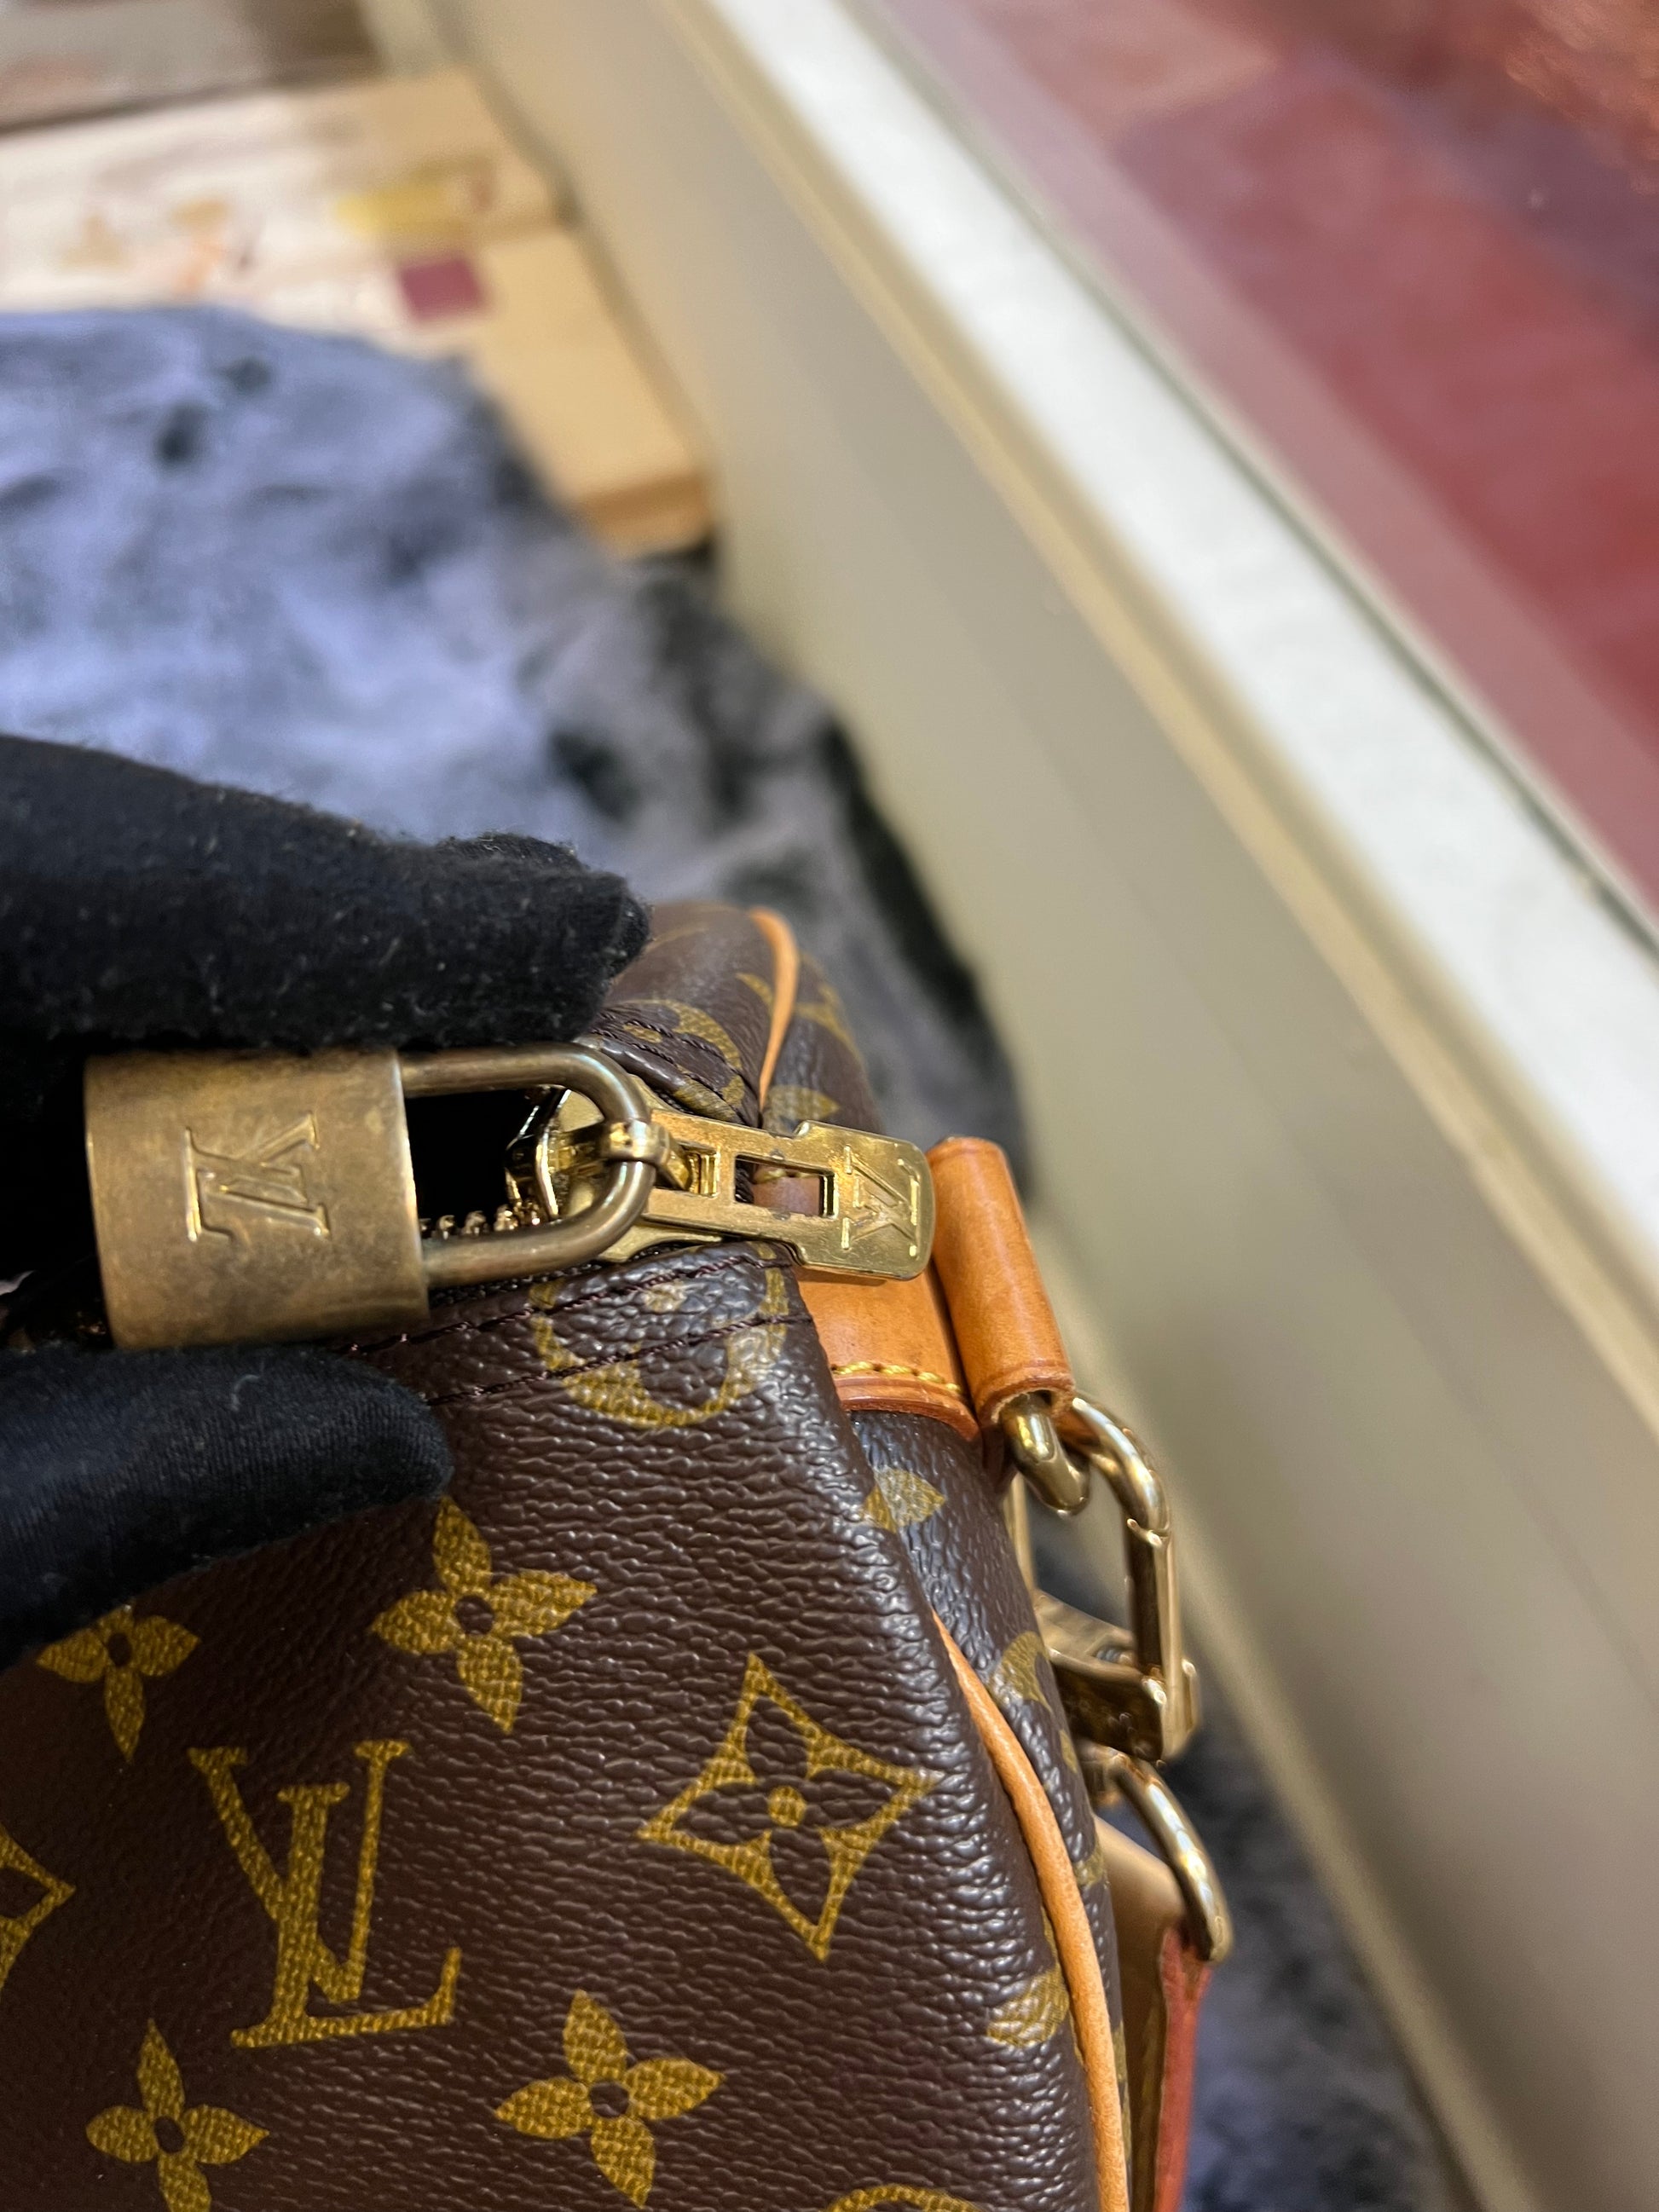 Pre-loved Louis Vuitton Keepall Bandoulière 50 Travel Bag Monogram